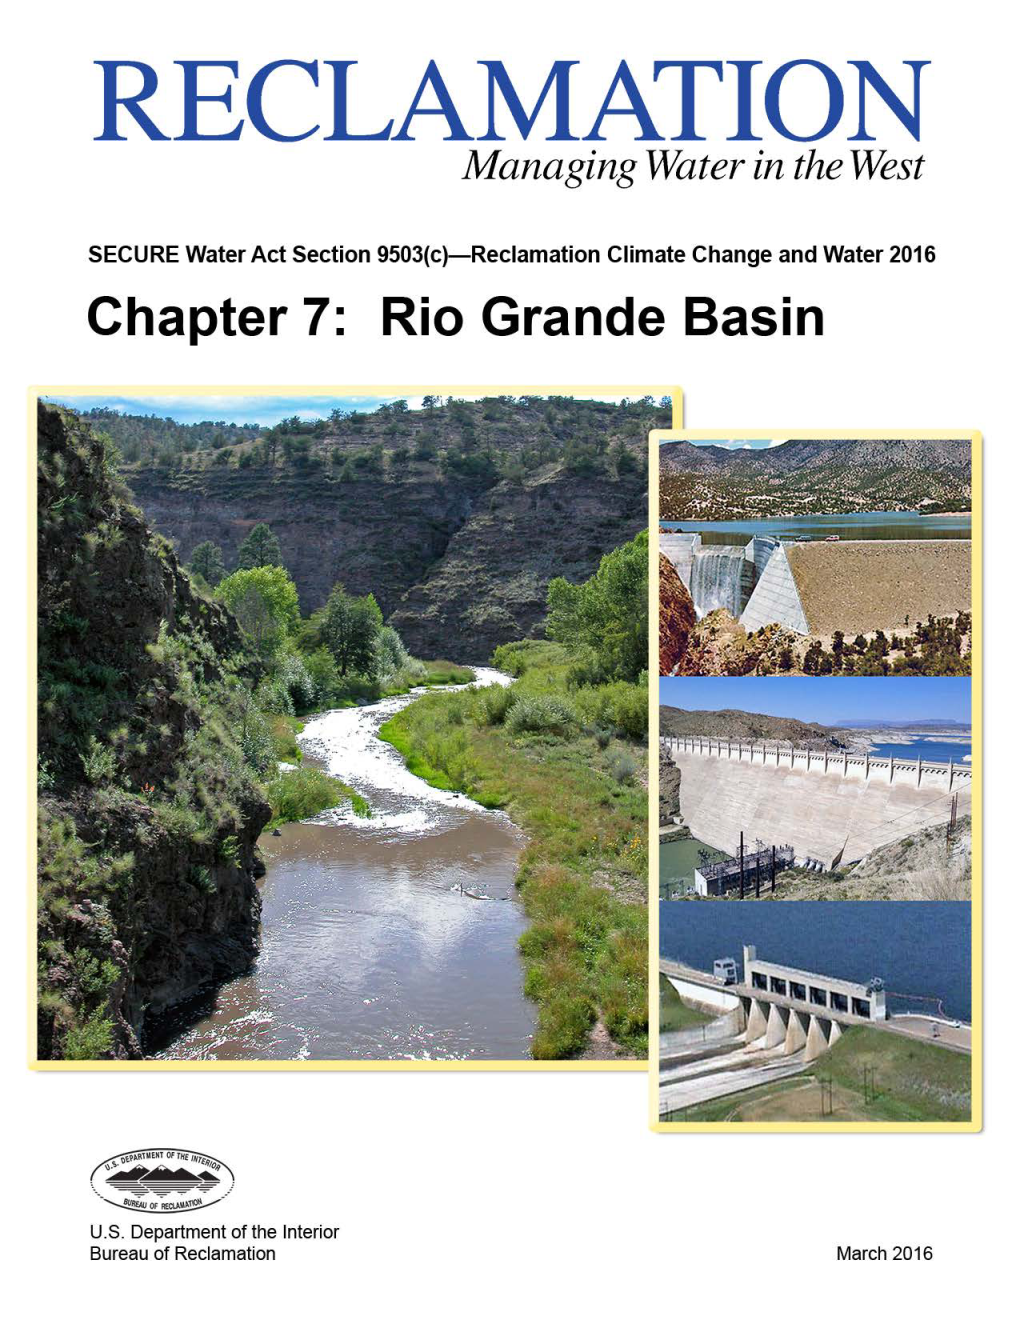 Rio Grande Basin